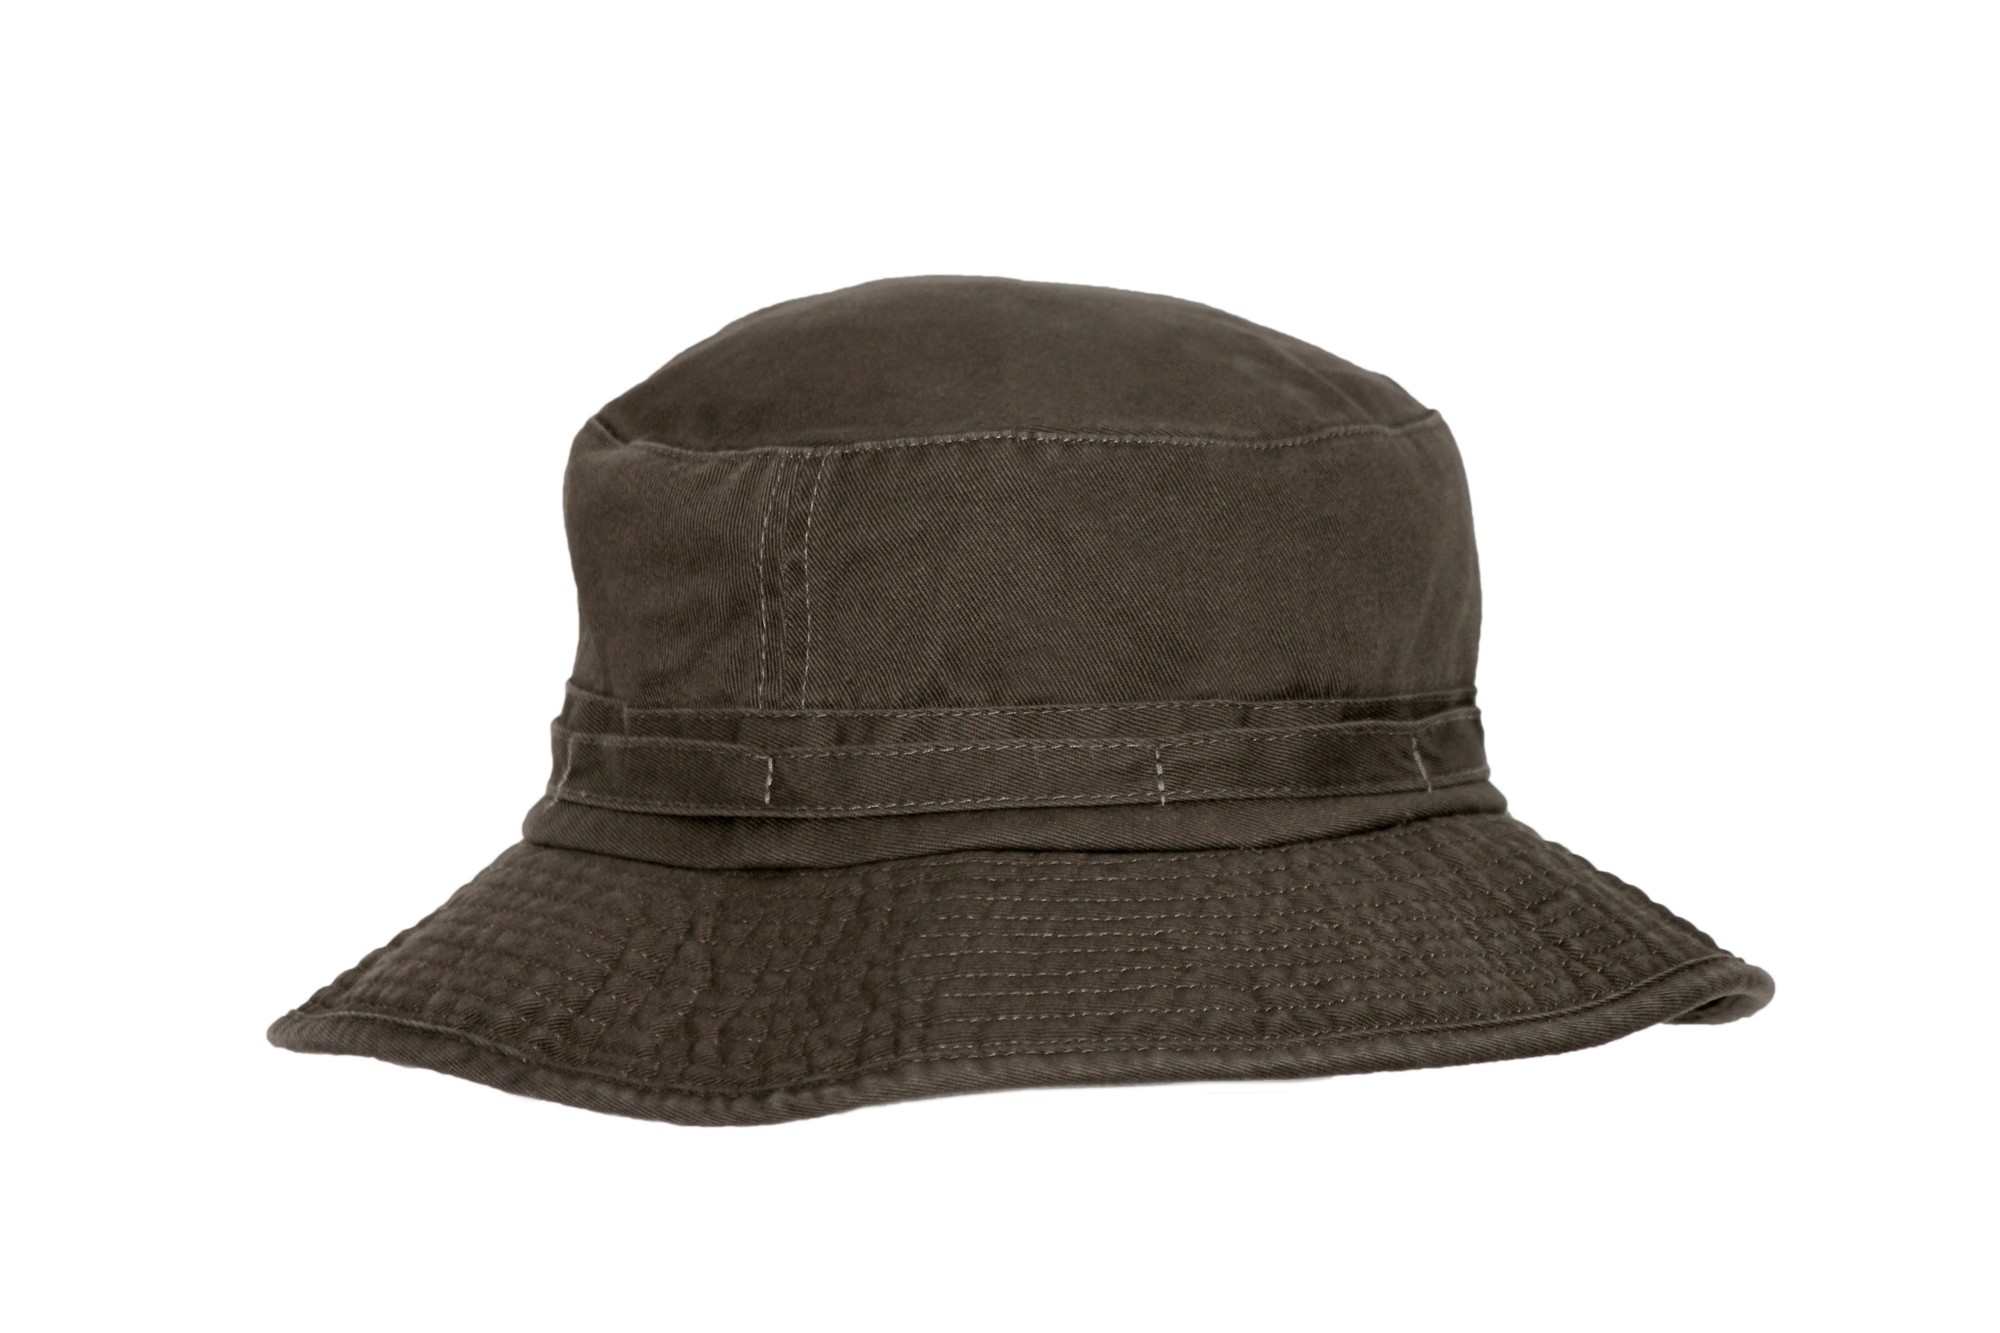 Rigon - UV boonie hat for men - Khaki